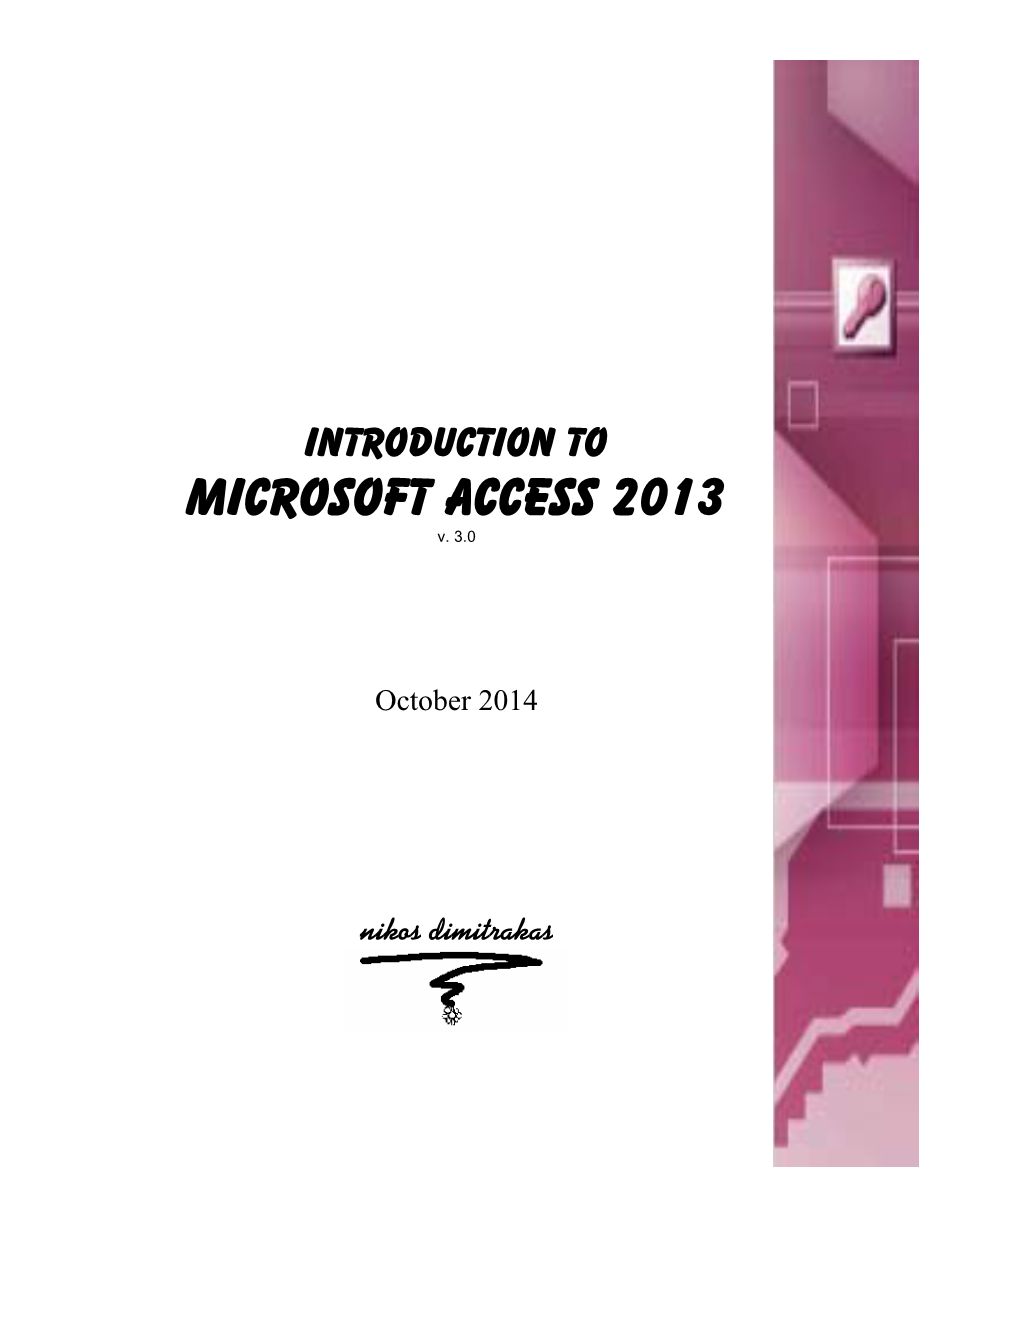 Microsoft Access 2013 V